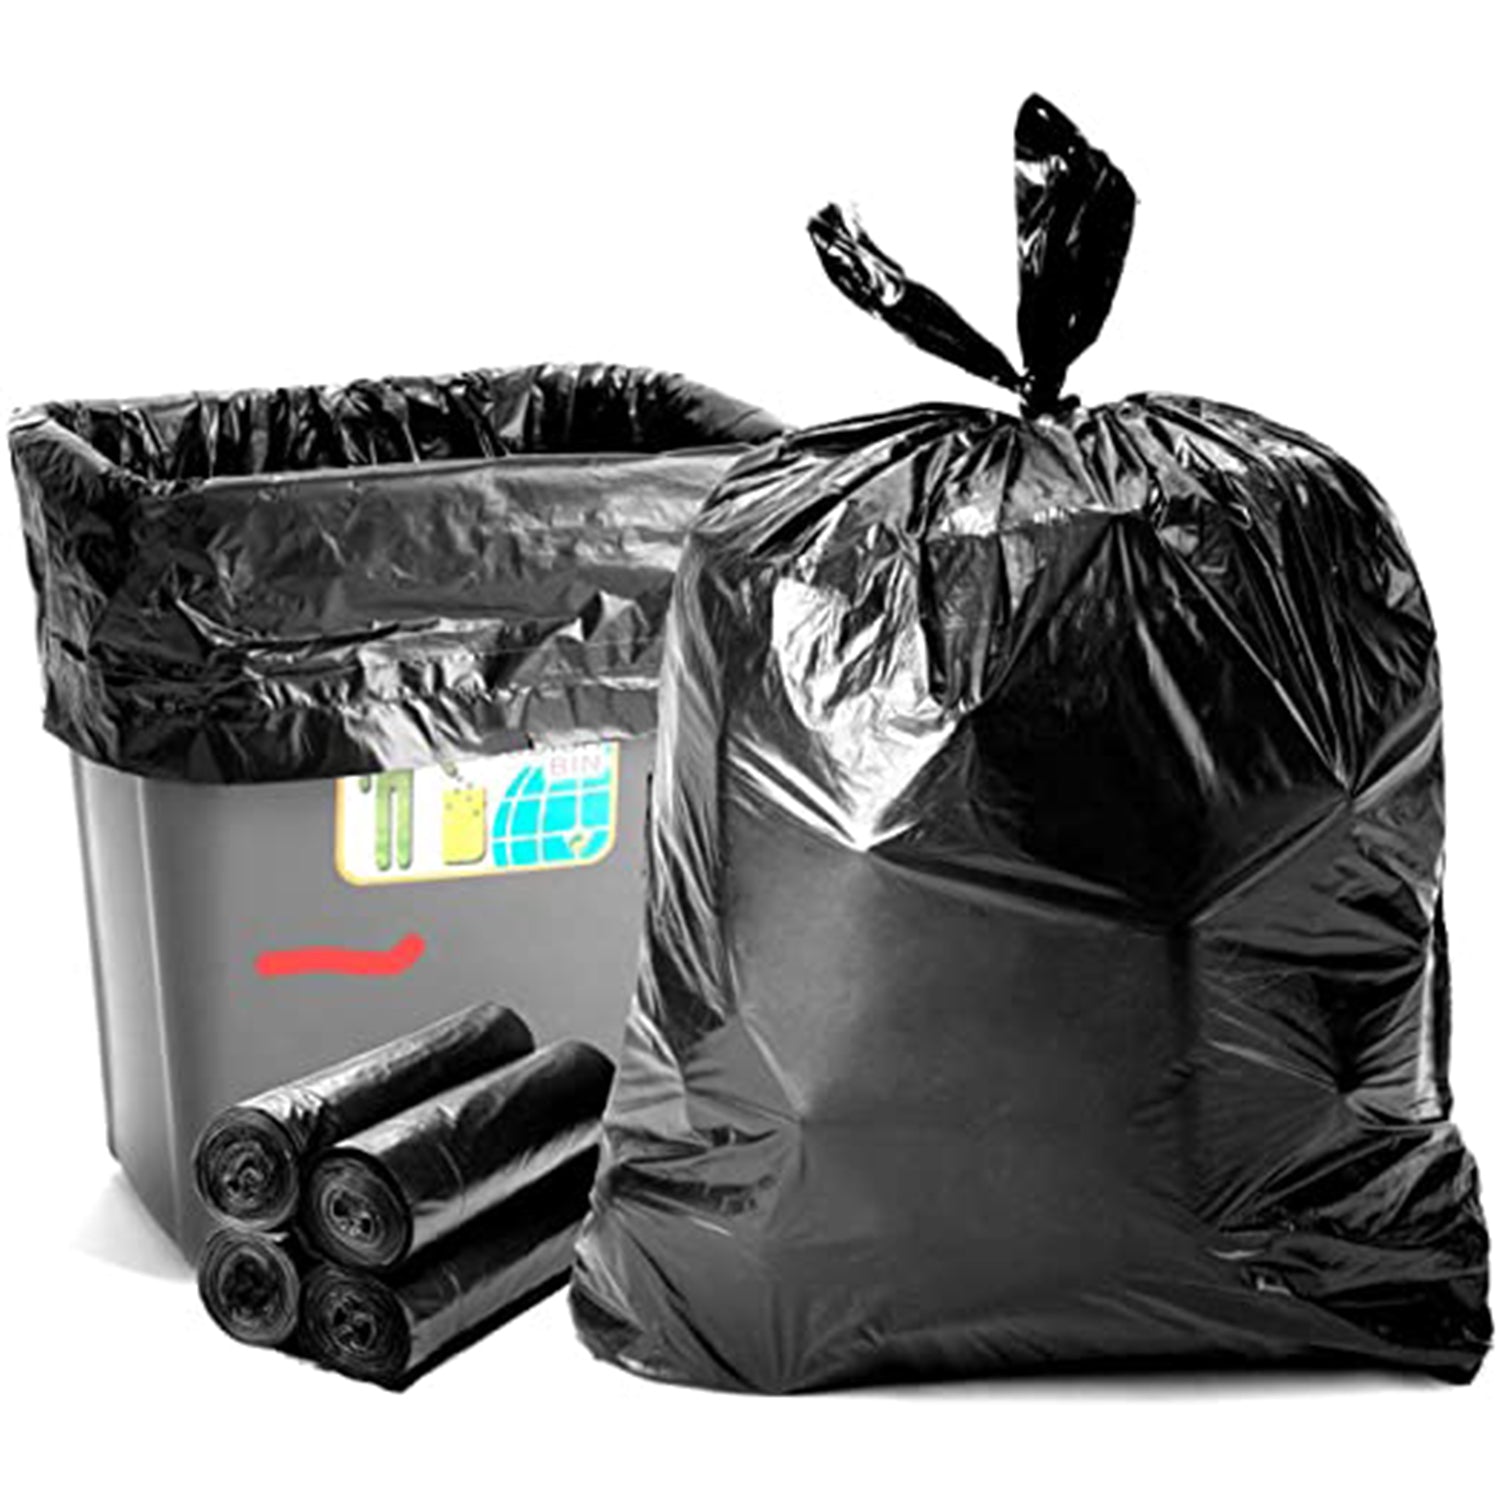 10-Gallon Kitchen Trash Bag, Drawstring Garbage Bags 30-Count Box